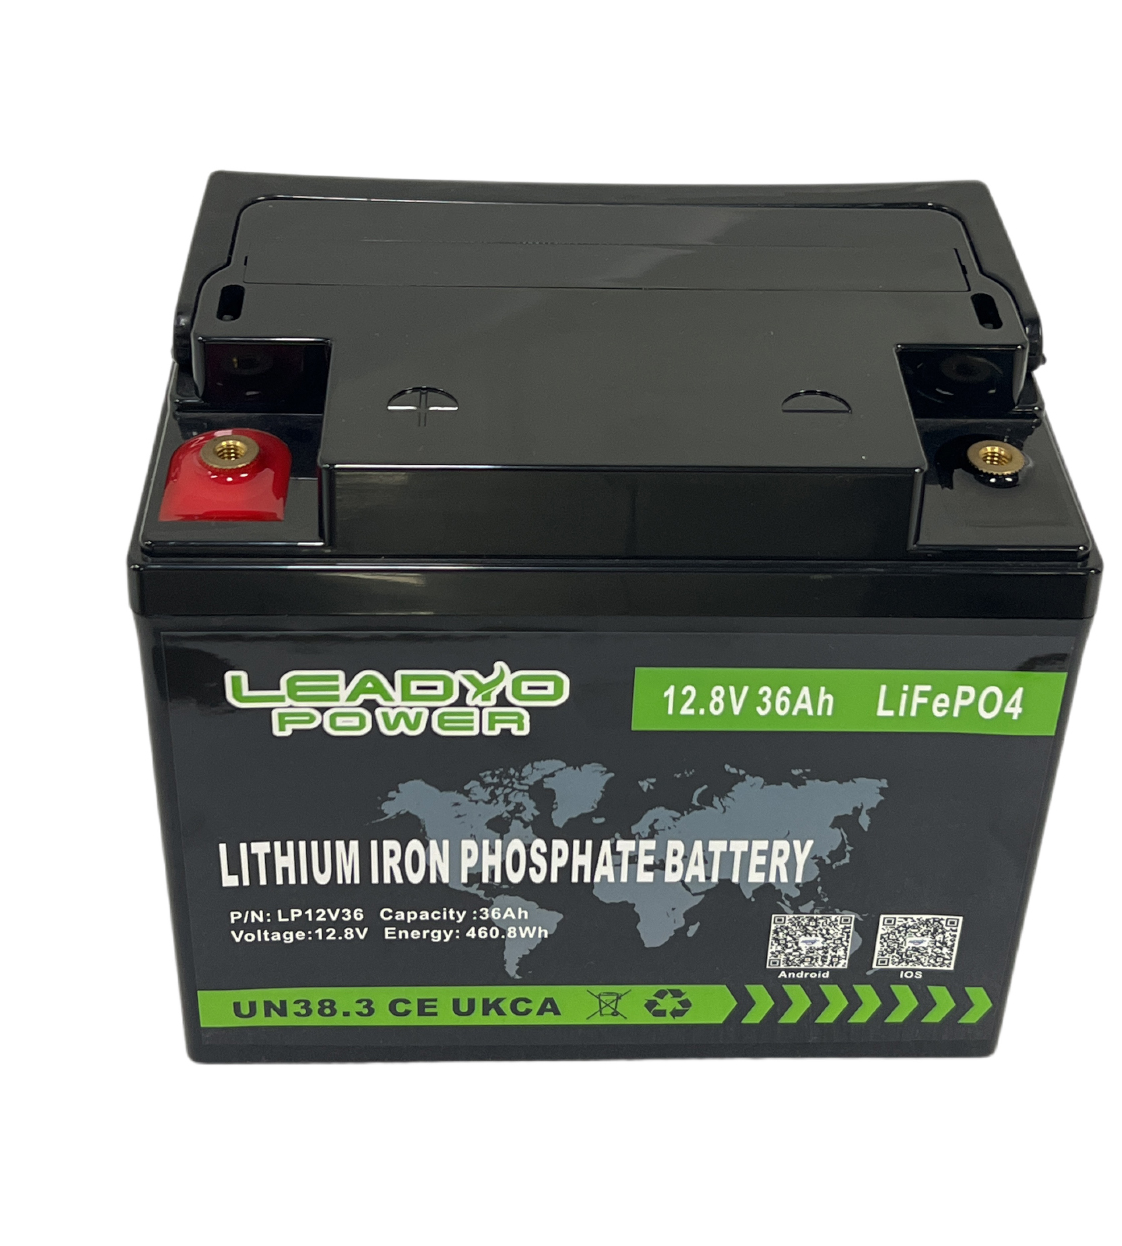 Leadyo Power: Enhancing Efficiency with Advanced Lifepo4 Batteries